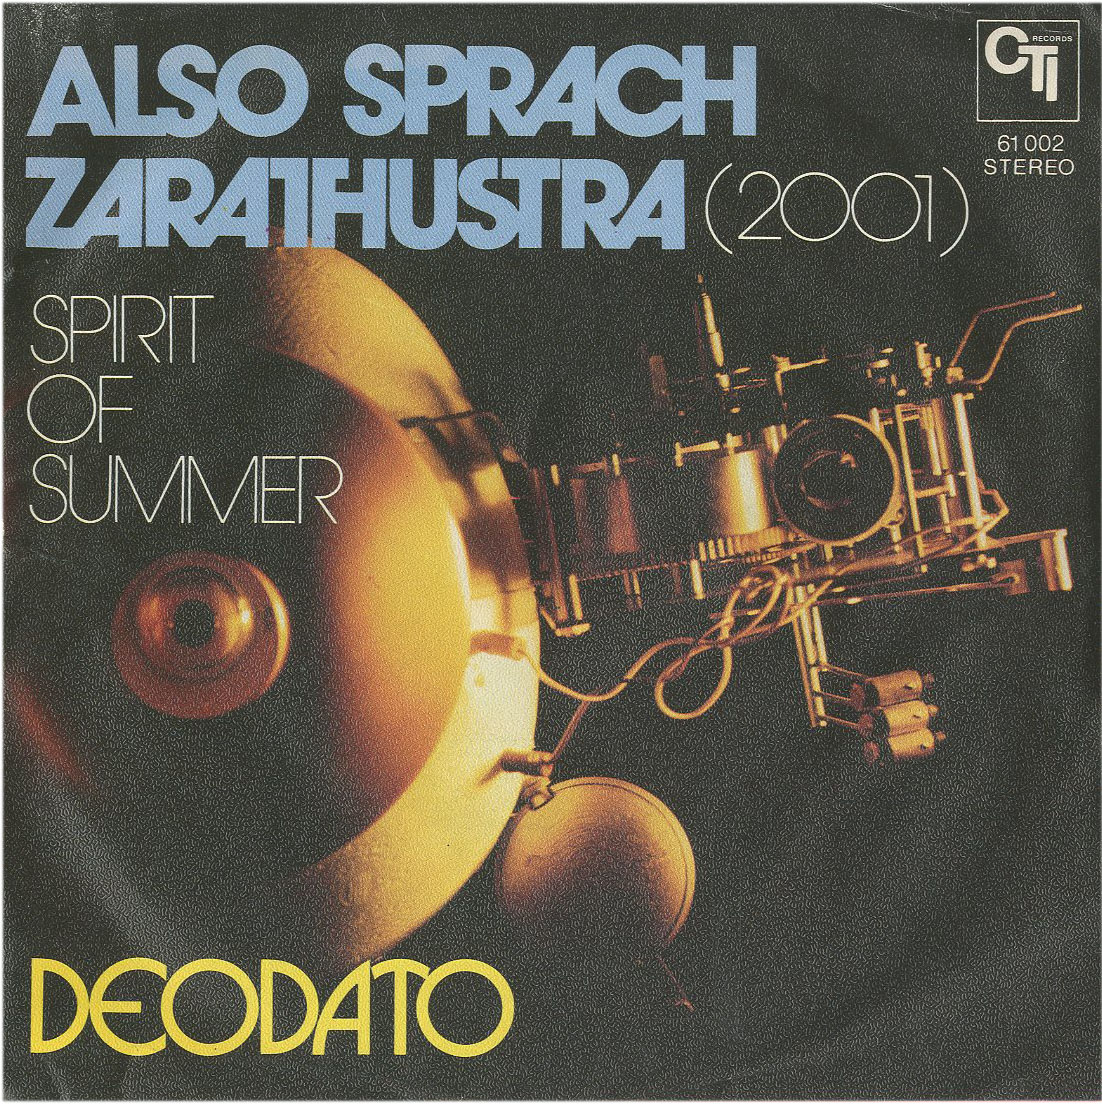 Albumcover Deodato - Also sprach Zarathustra (2001) / Spirit Of Summer